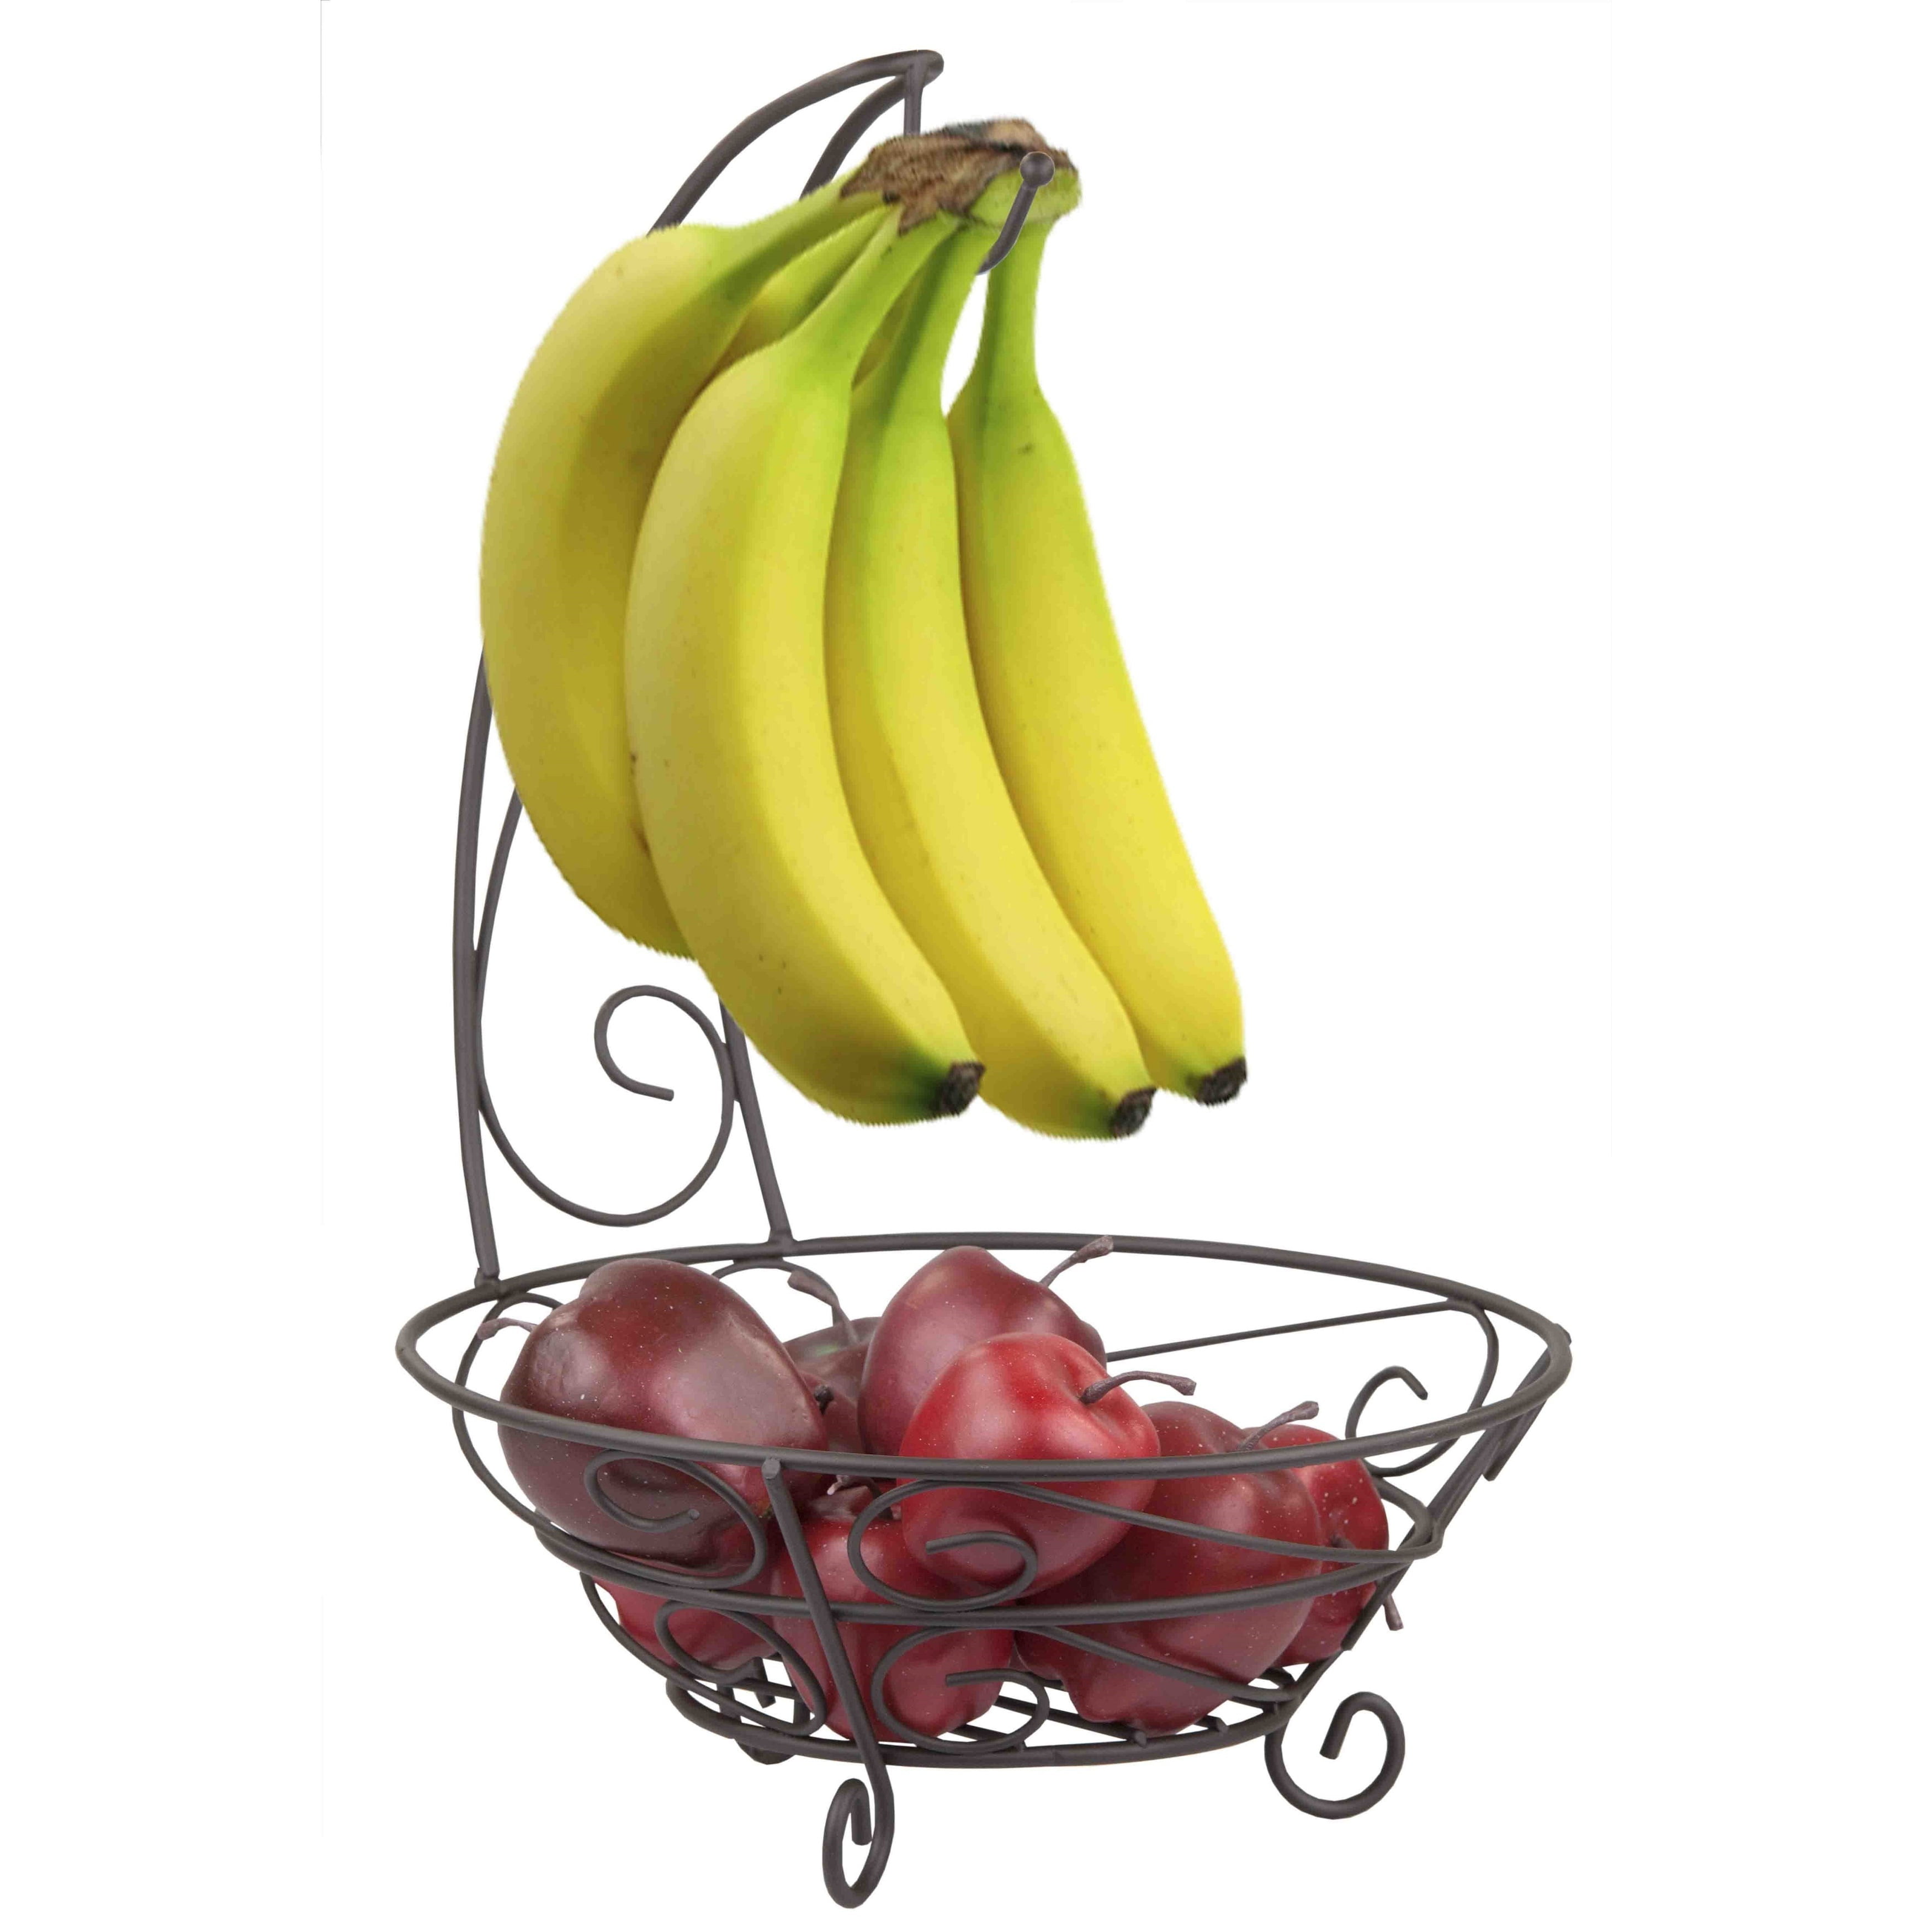 JMiles UH-FB244 Fruit Basket with Banana Hanger Sliver Black Wire Fruit Basket with Hook for Hanging Bananas Preserves Freshness and Saves Space 